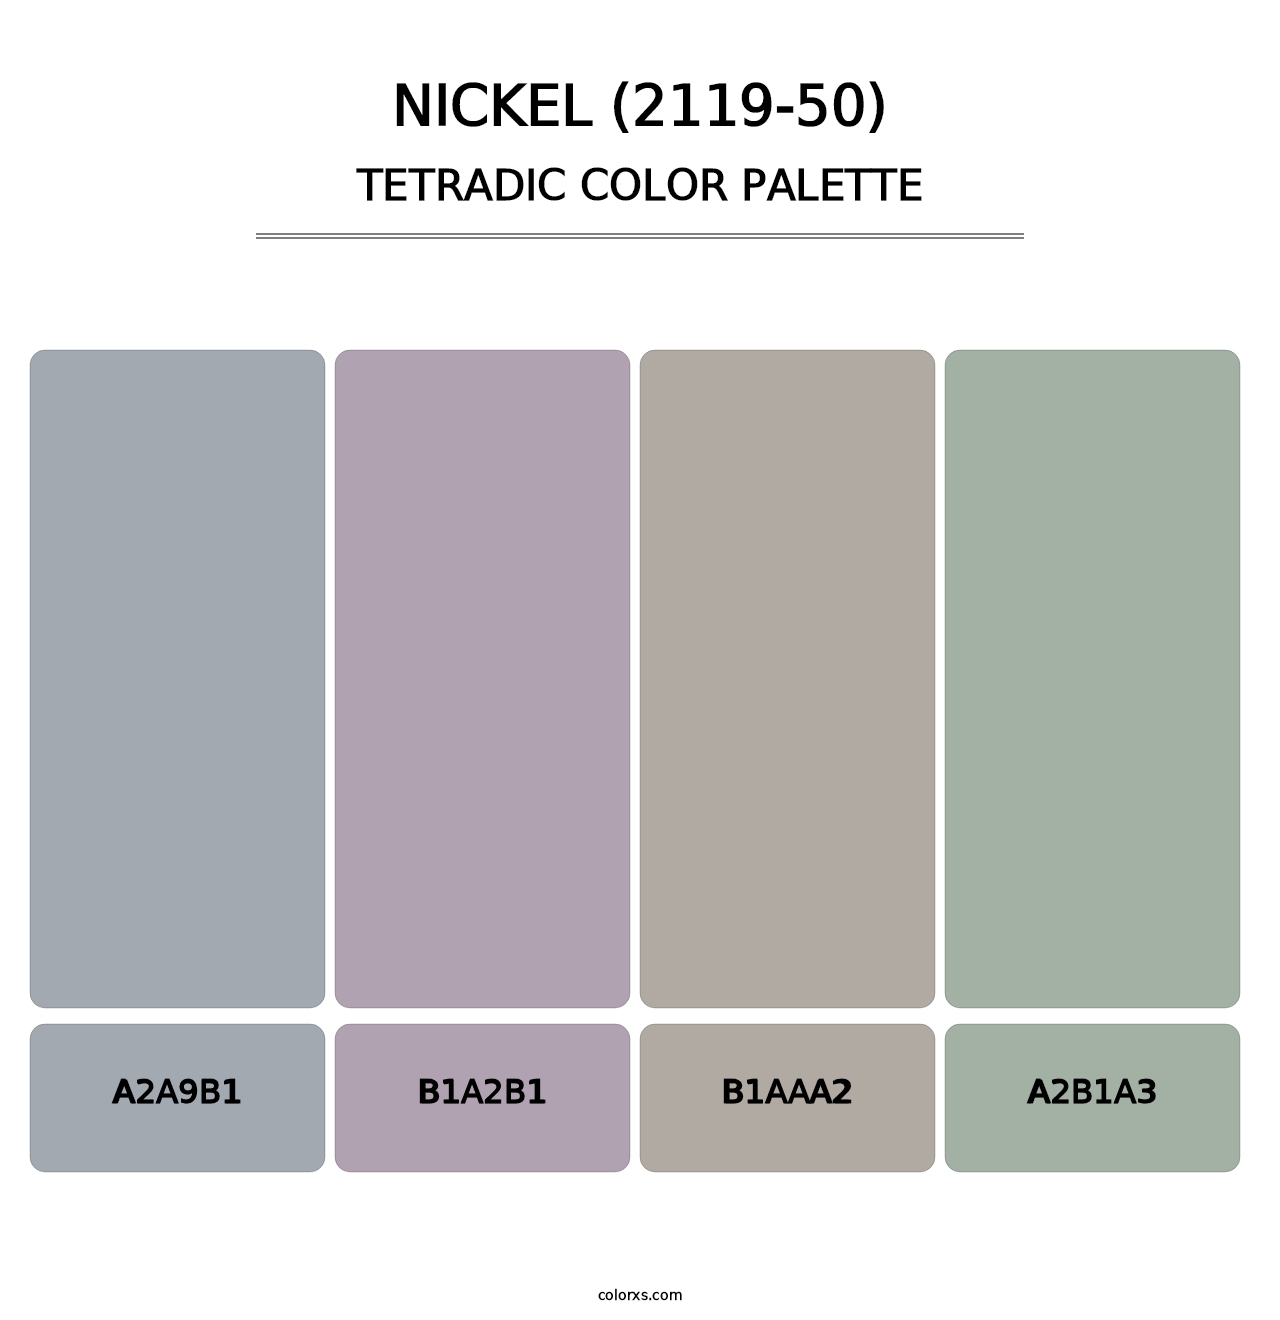 Nickel (2119-50) - Tetradic Color Palette